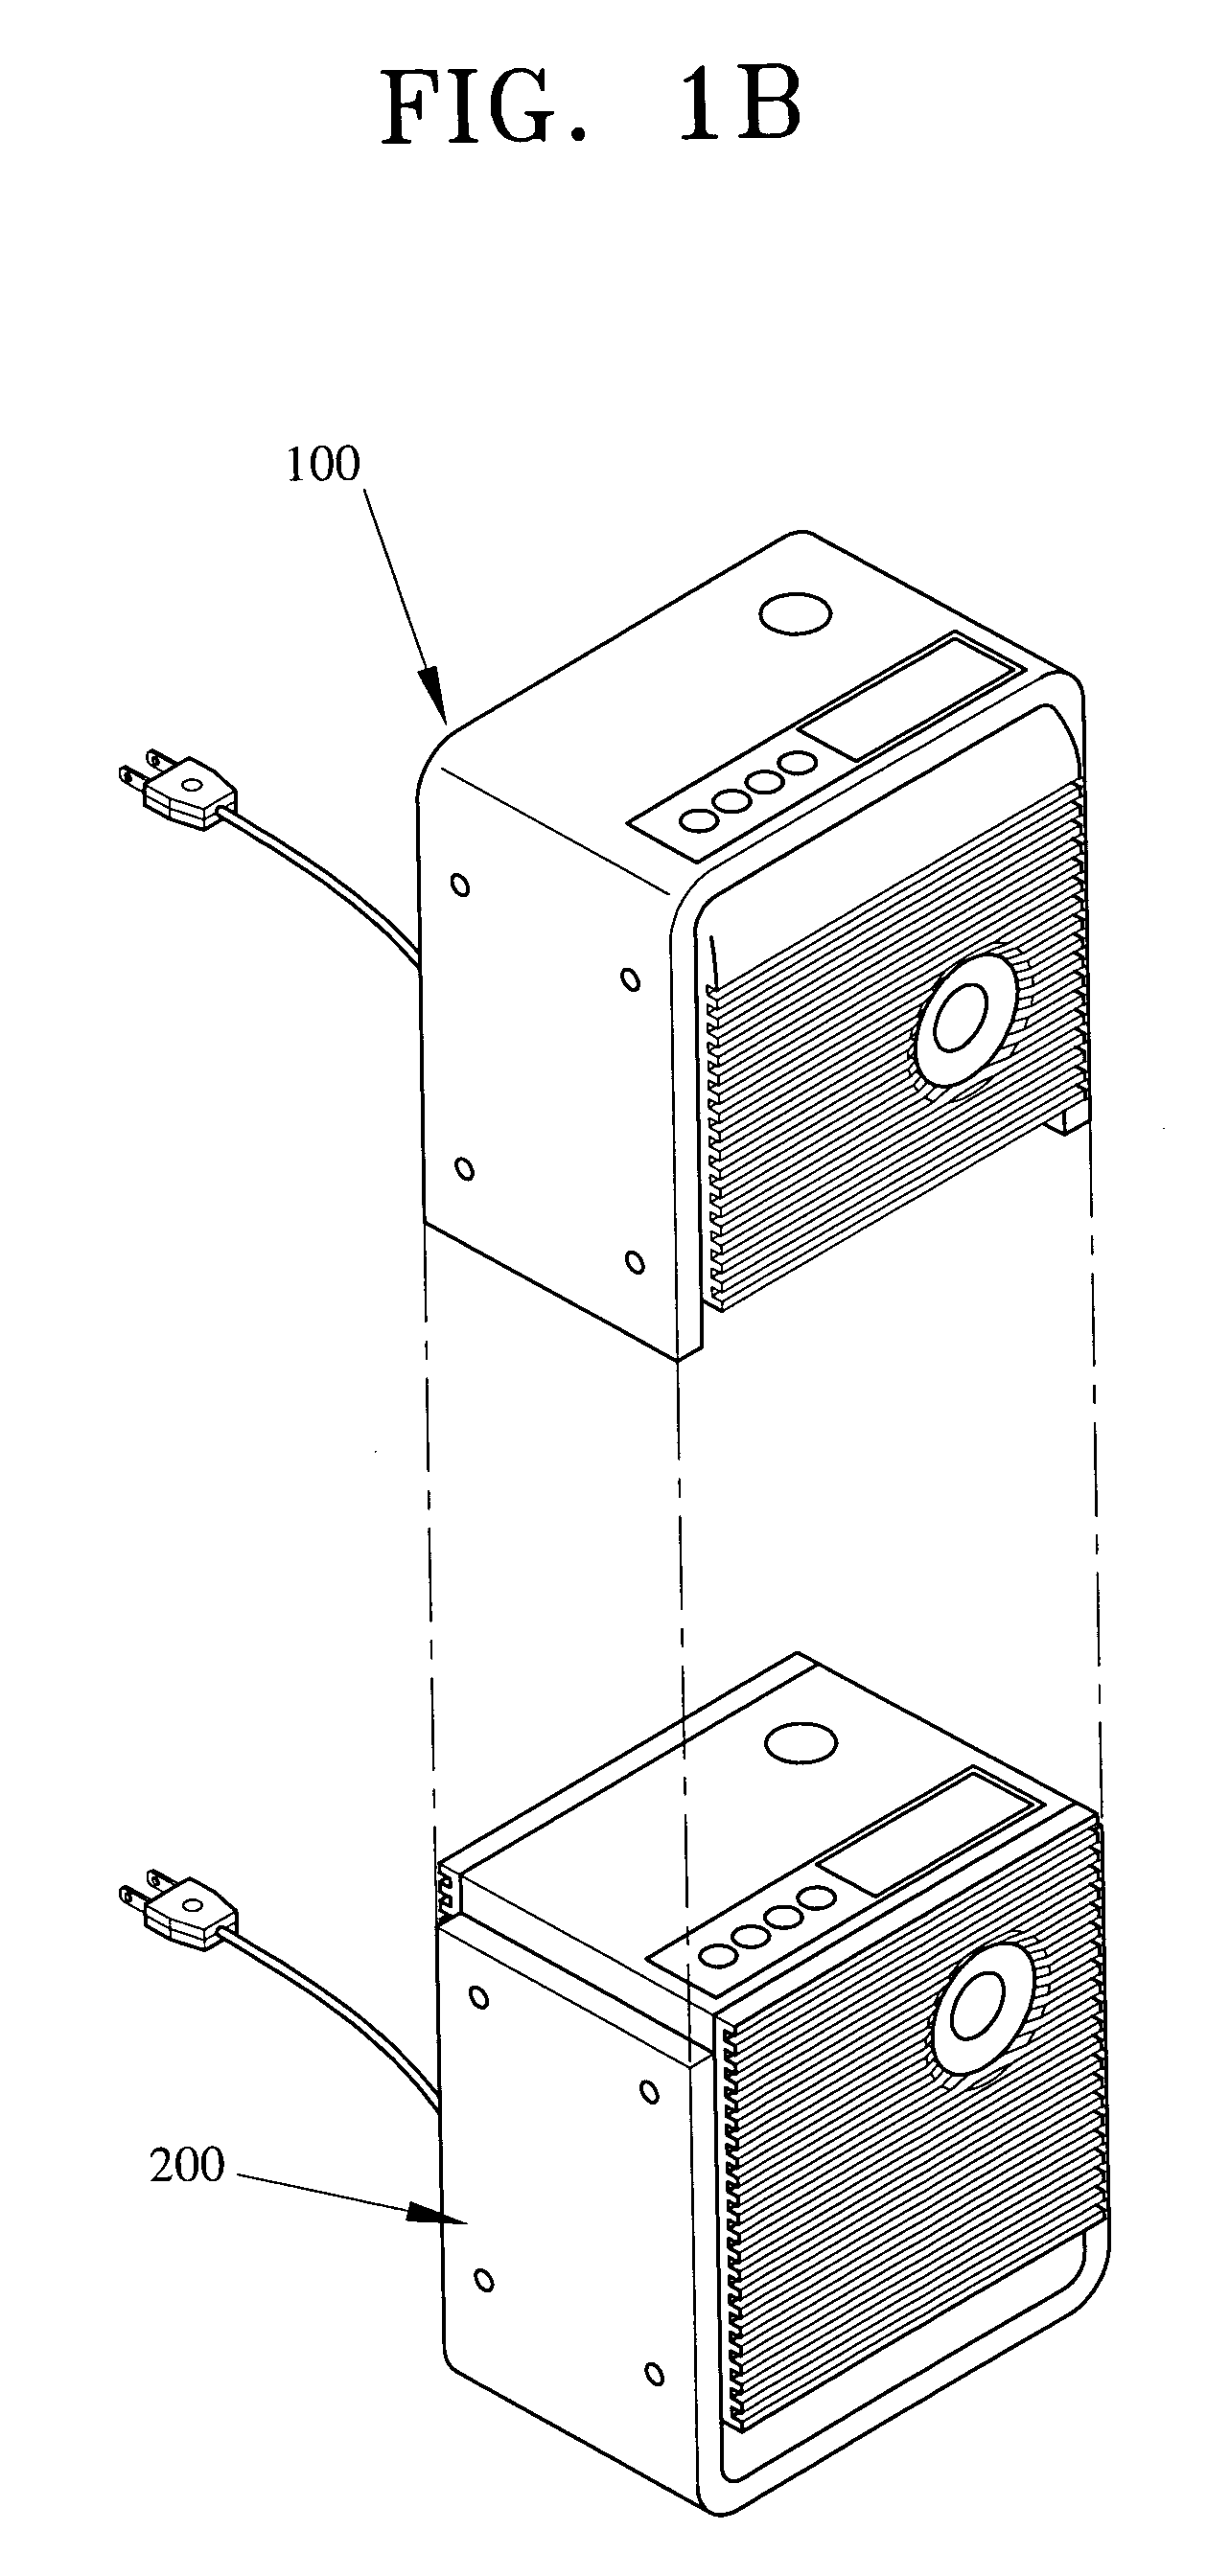 Separable air purifying apparatus